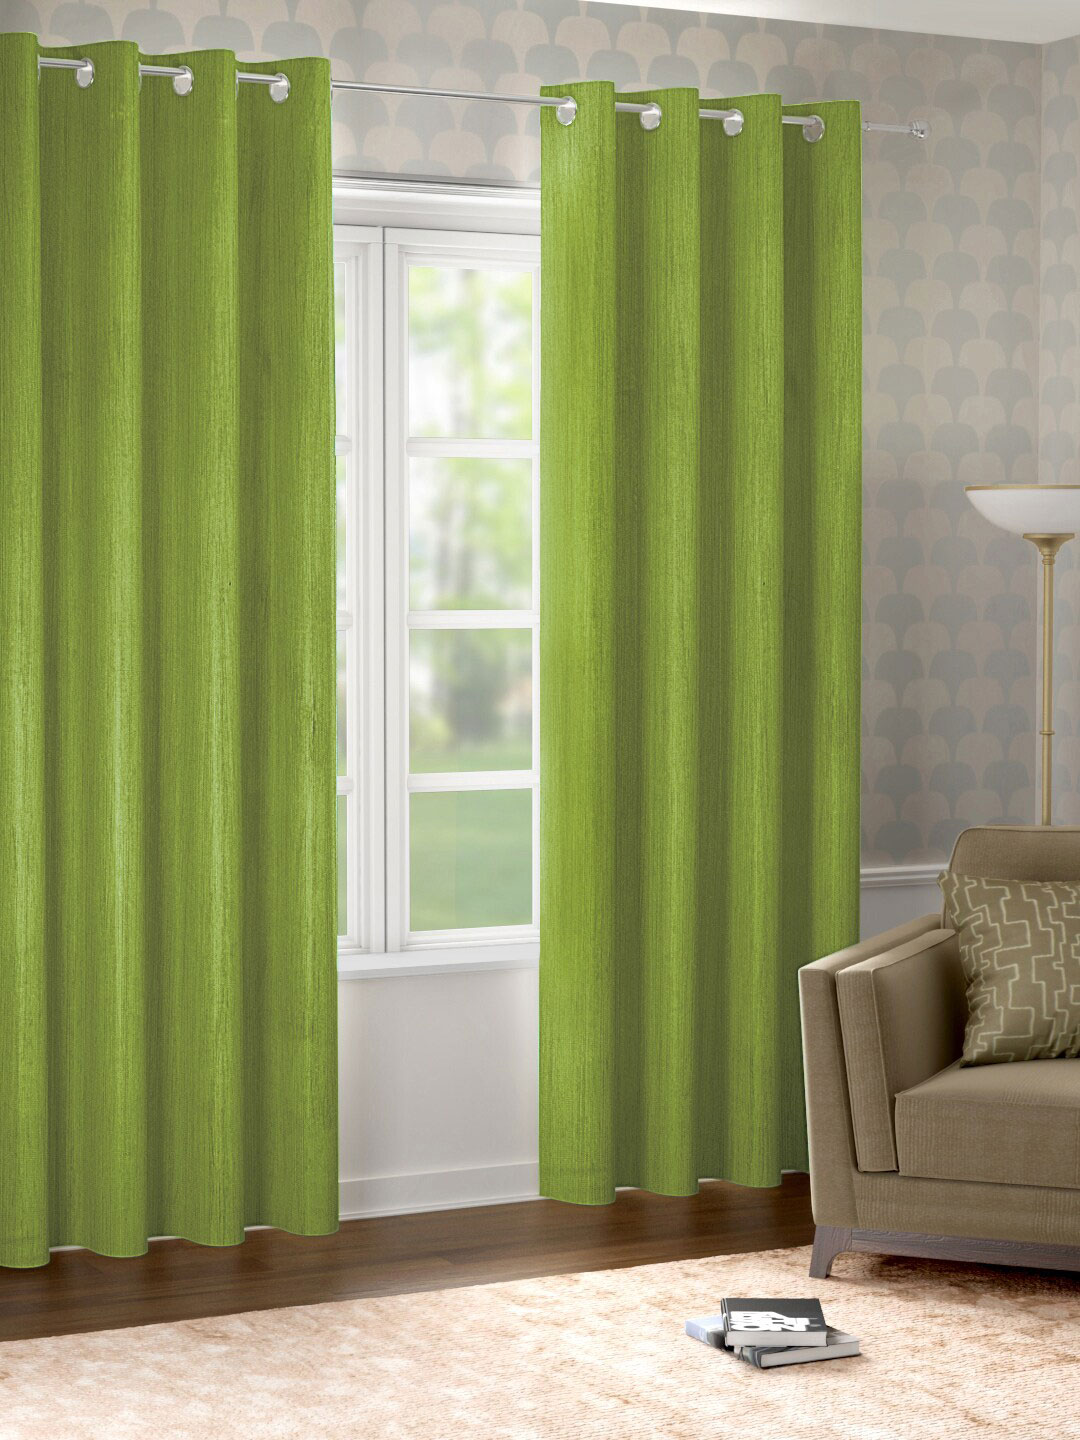 Raymond Home Green Door Curtain Price in India